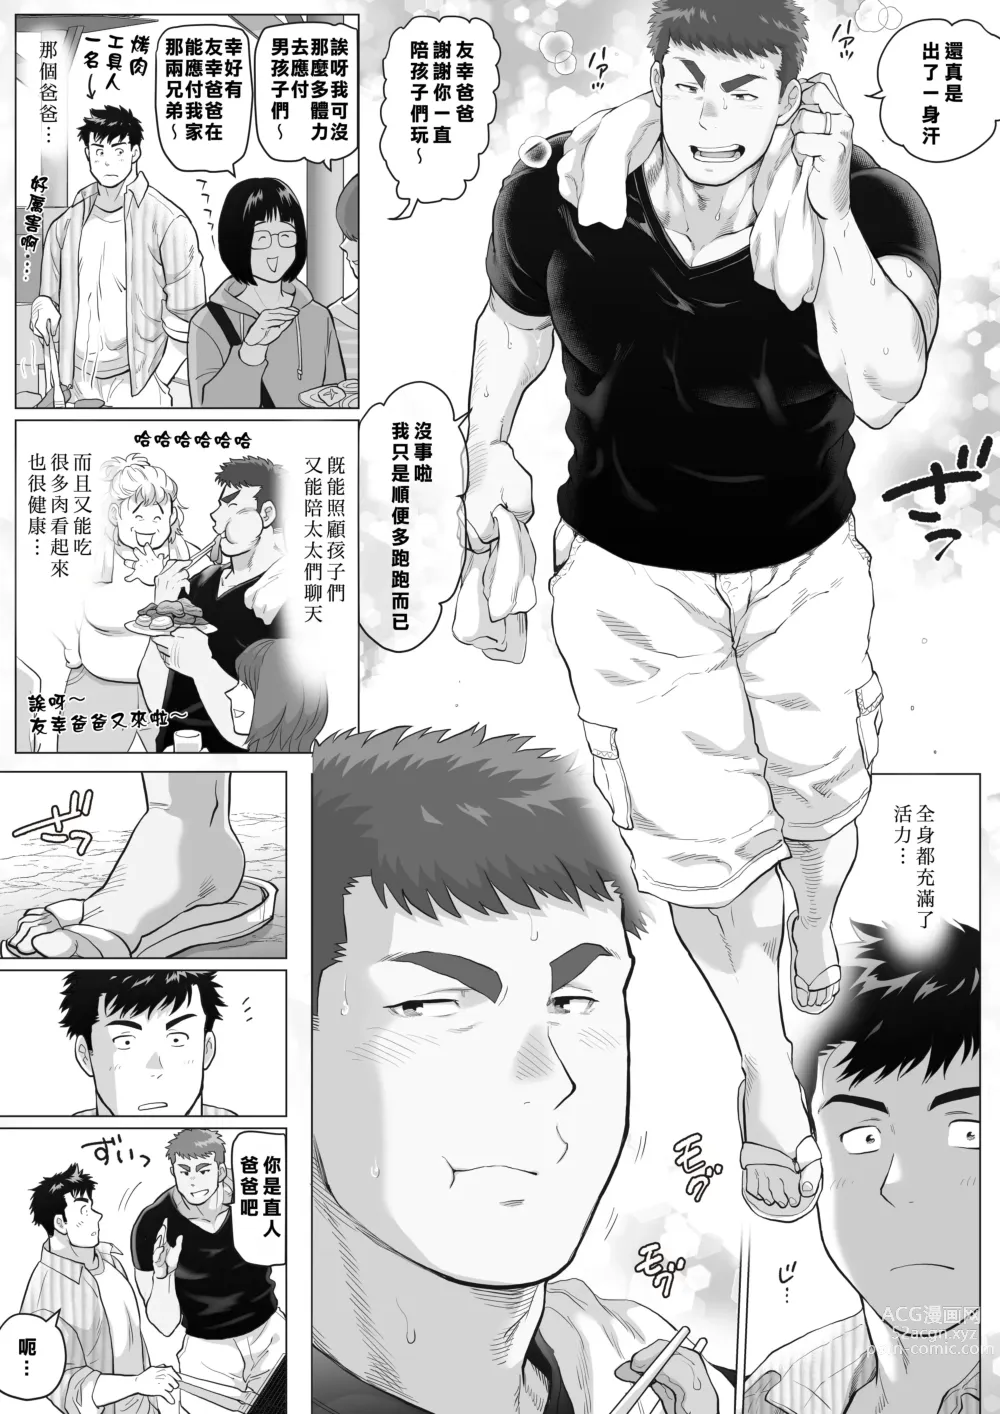 Page 5 of manga 直人爸爸与友幸爸爸 第一话